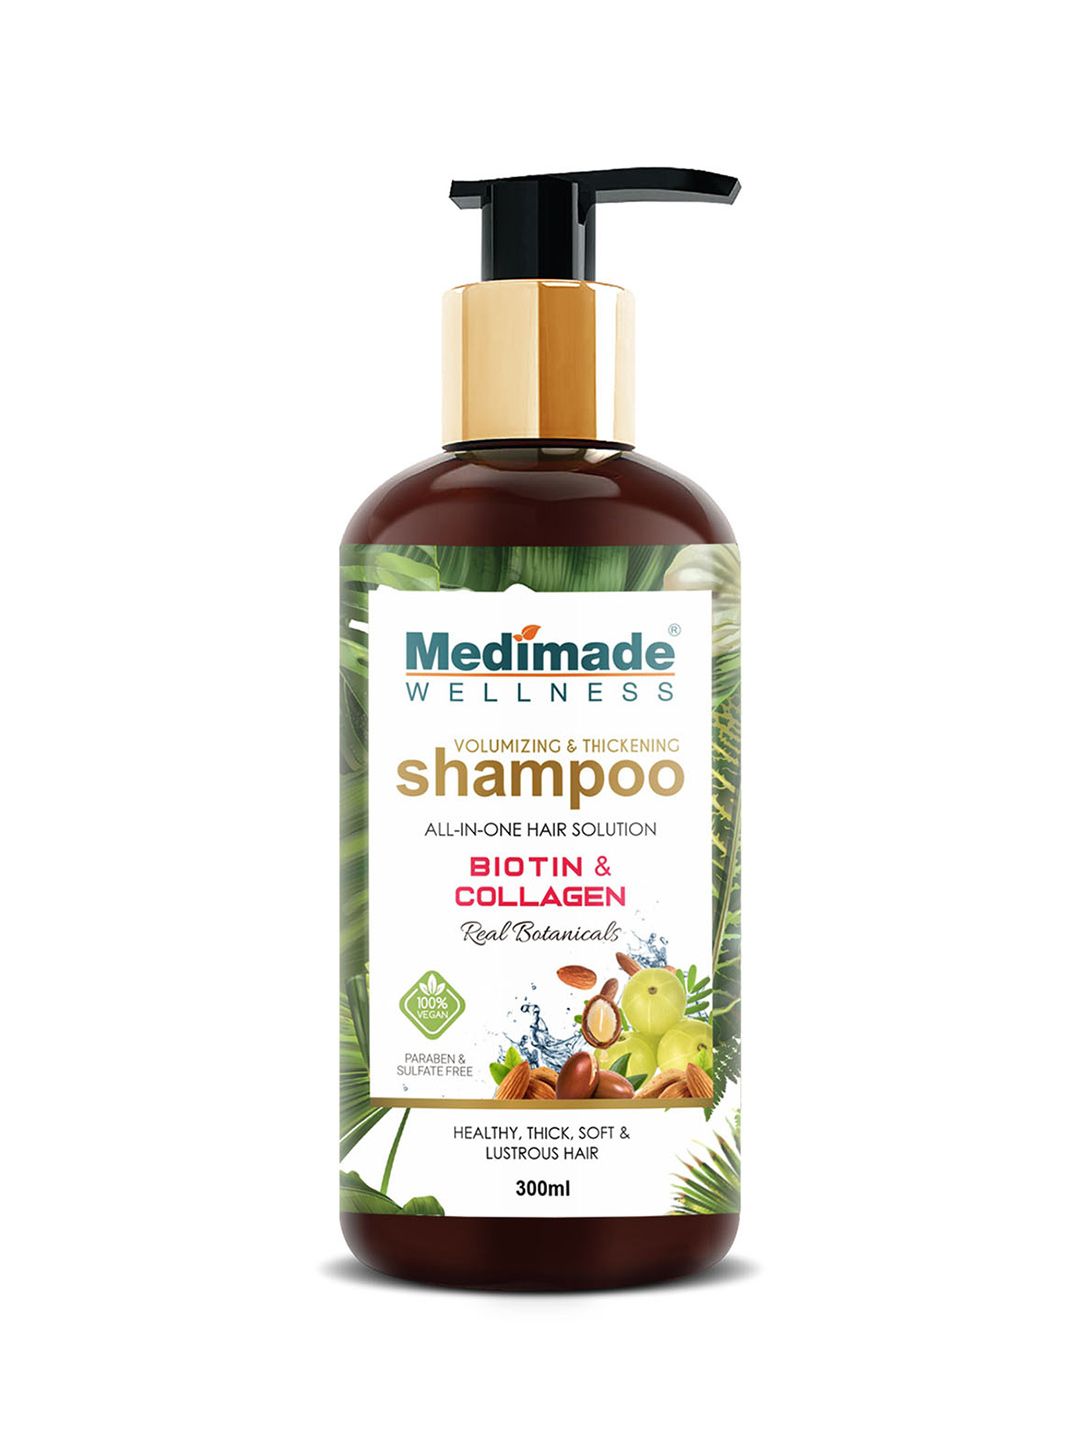 Medimade Volumizing & Thickening Shampoo with Biotin & Collagen 300 ml Price in India